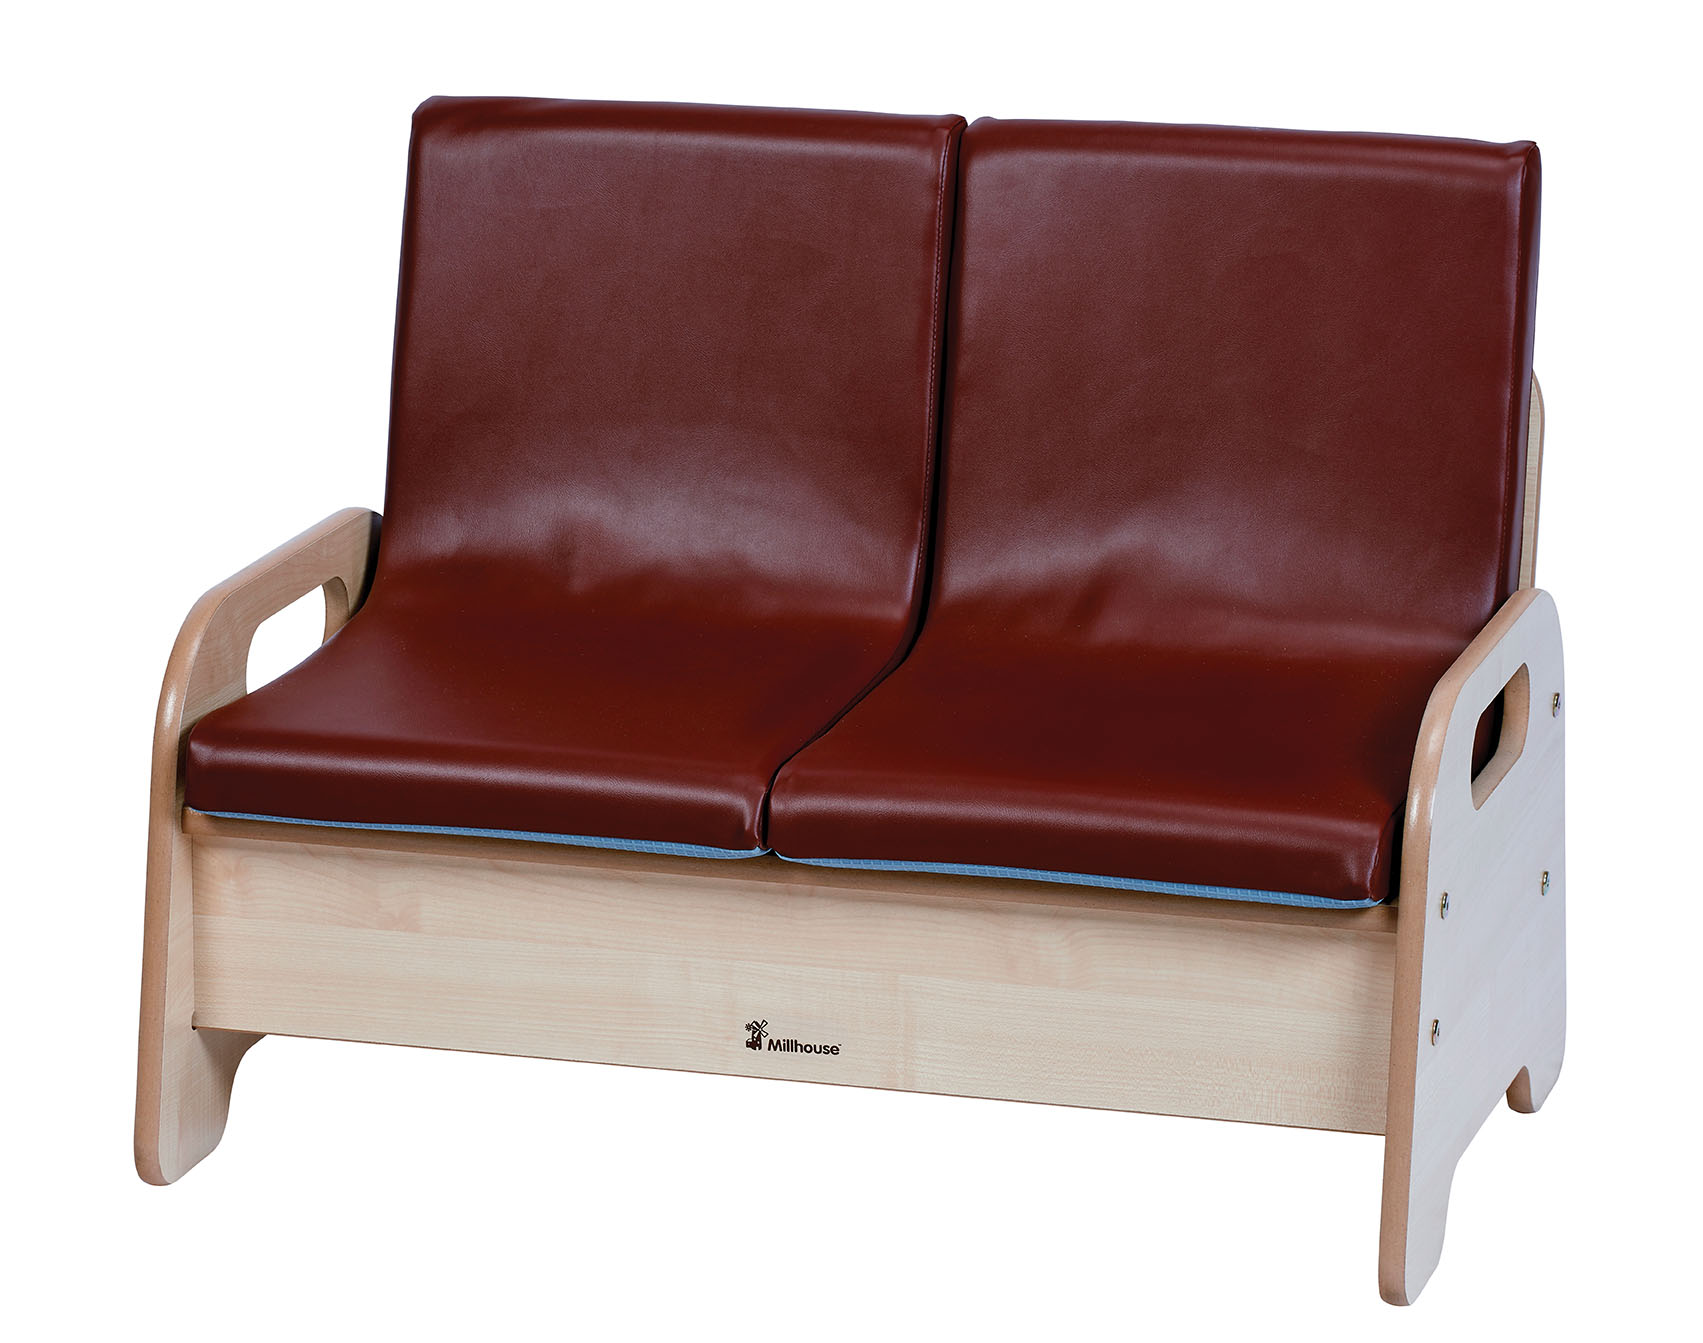 PT973-Millhouse-Early-Years-Furniture-2-Seat-Sofa_Main_RGB.jpg